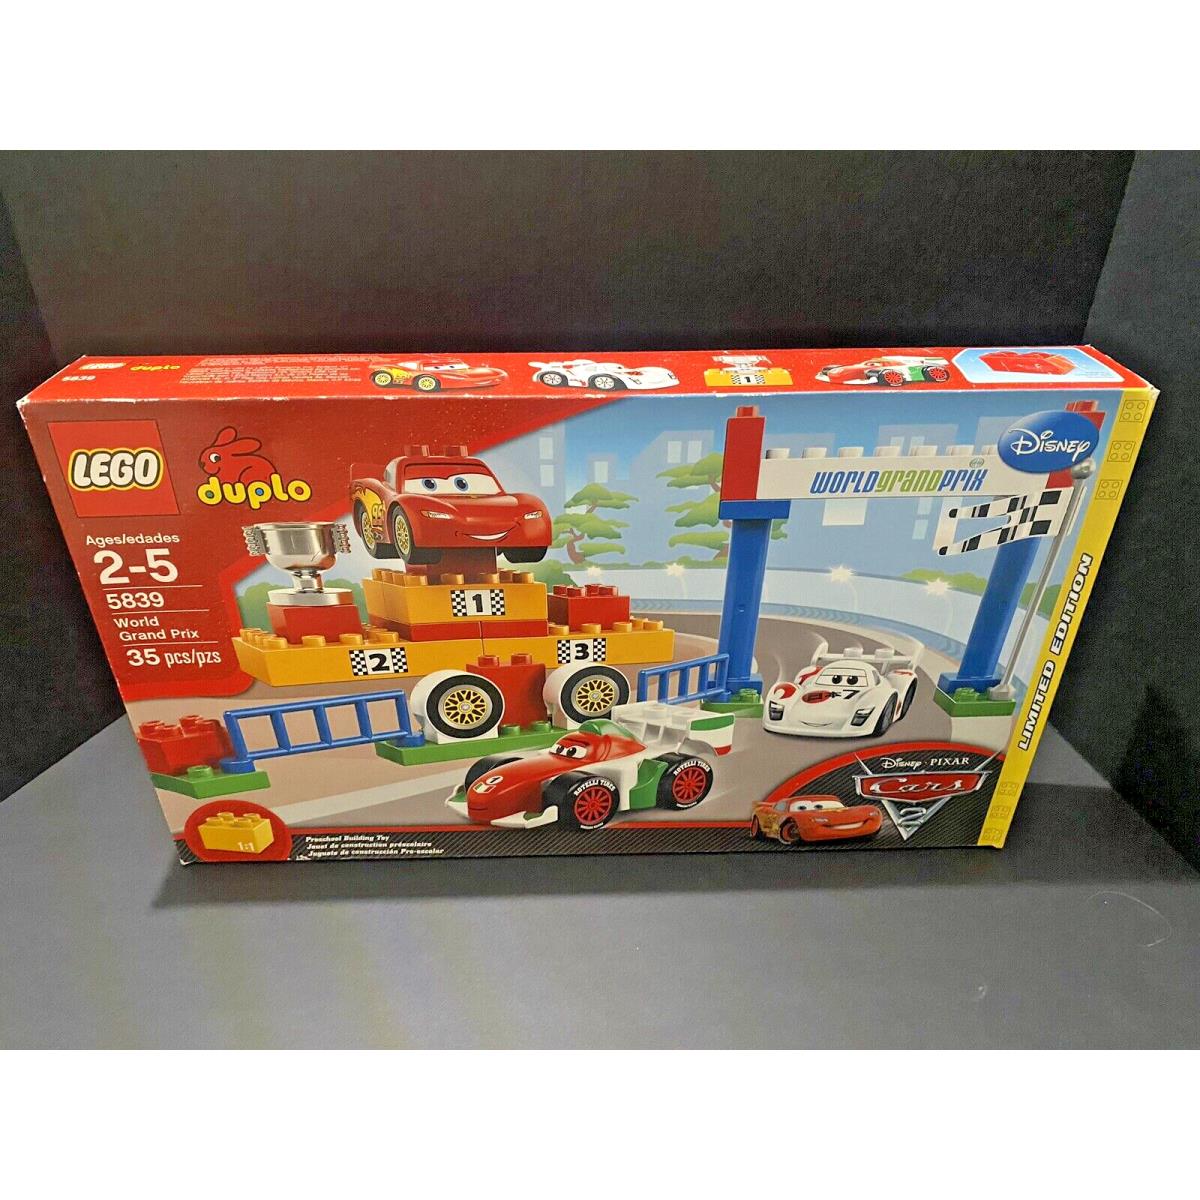 Lego Duplo World Grand Price 5839 Set